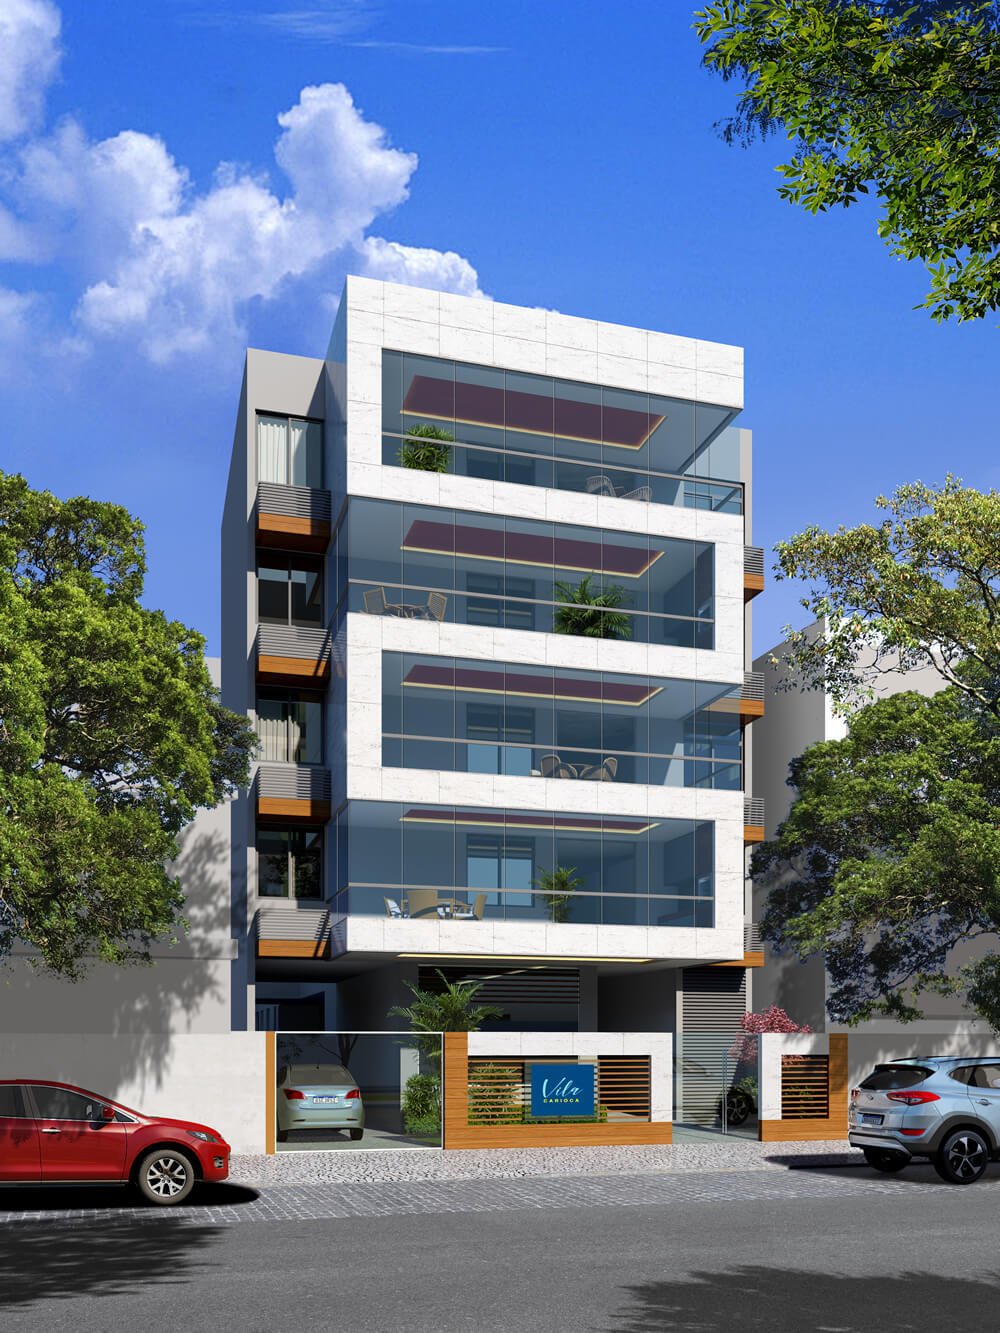 Cobertura Duplex - Lanamentos - Vila Isabel - Rio de Janeiro - RJ